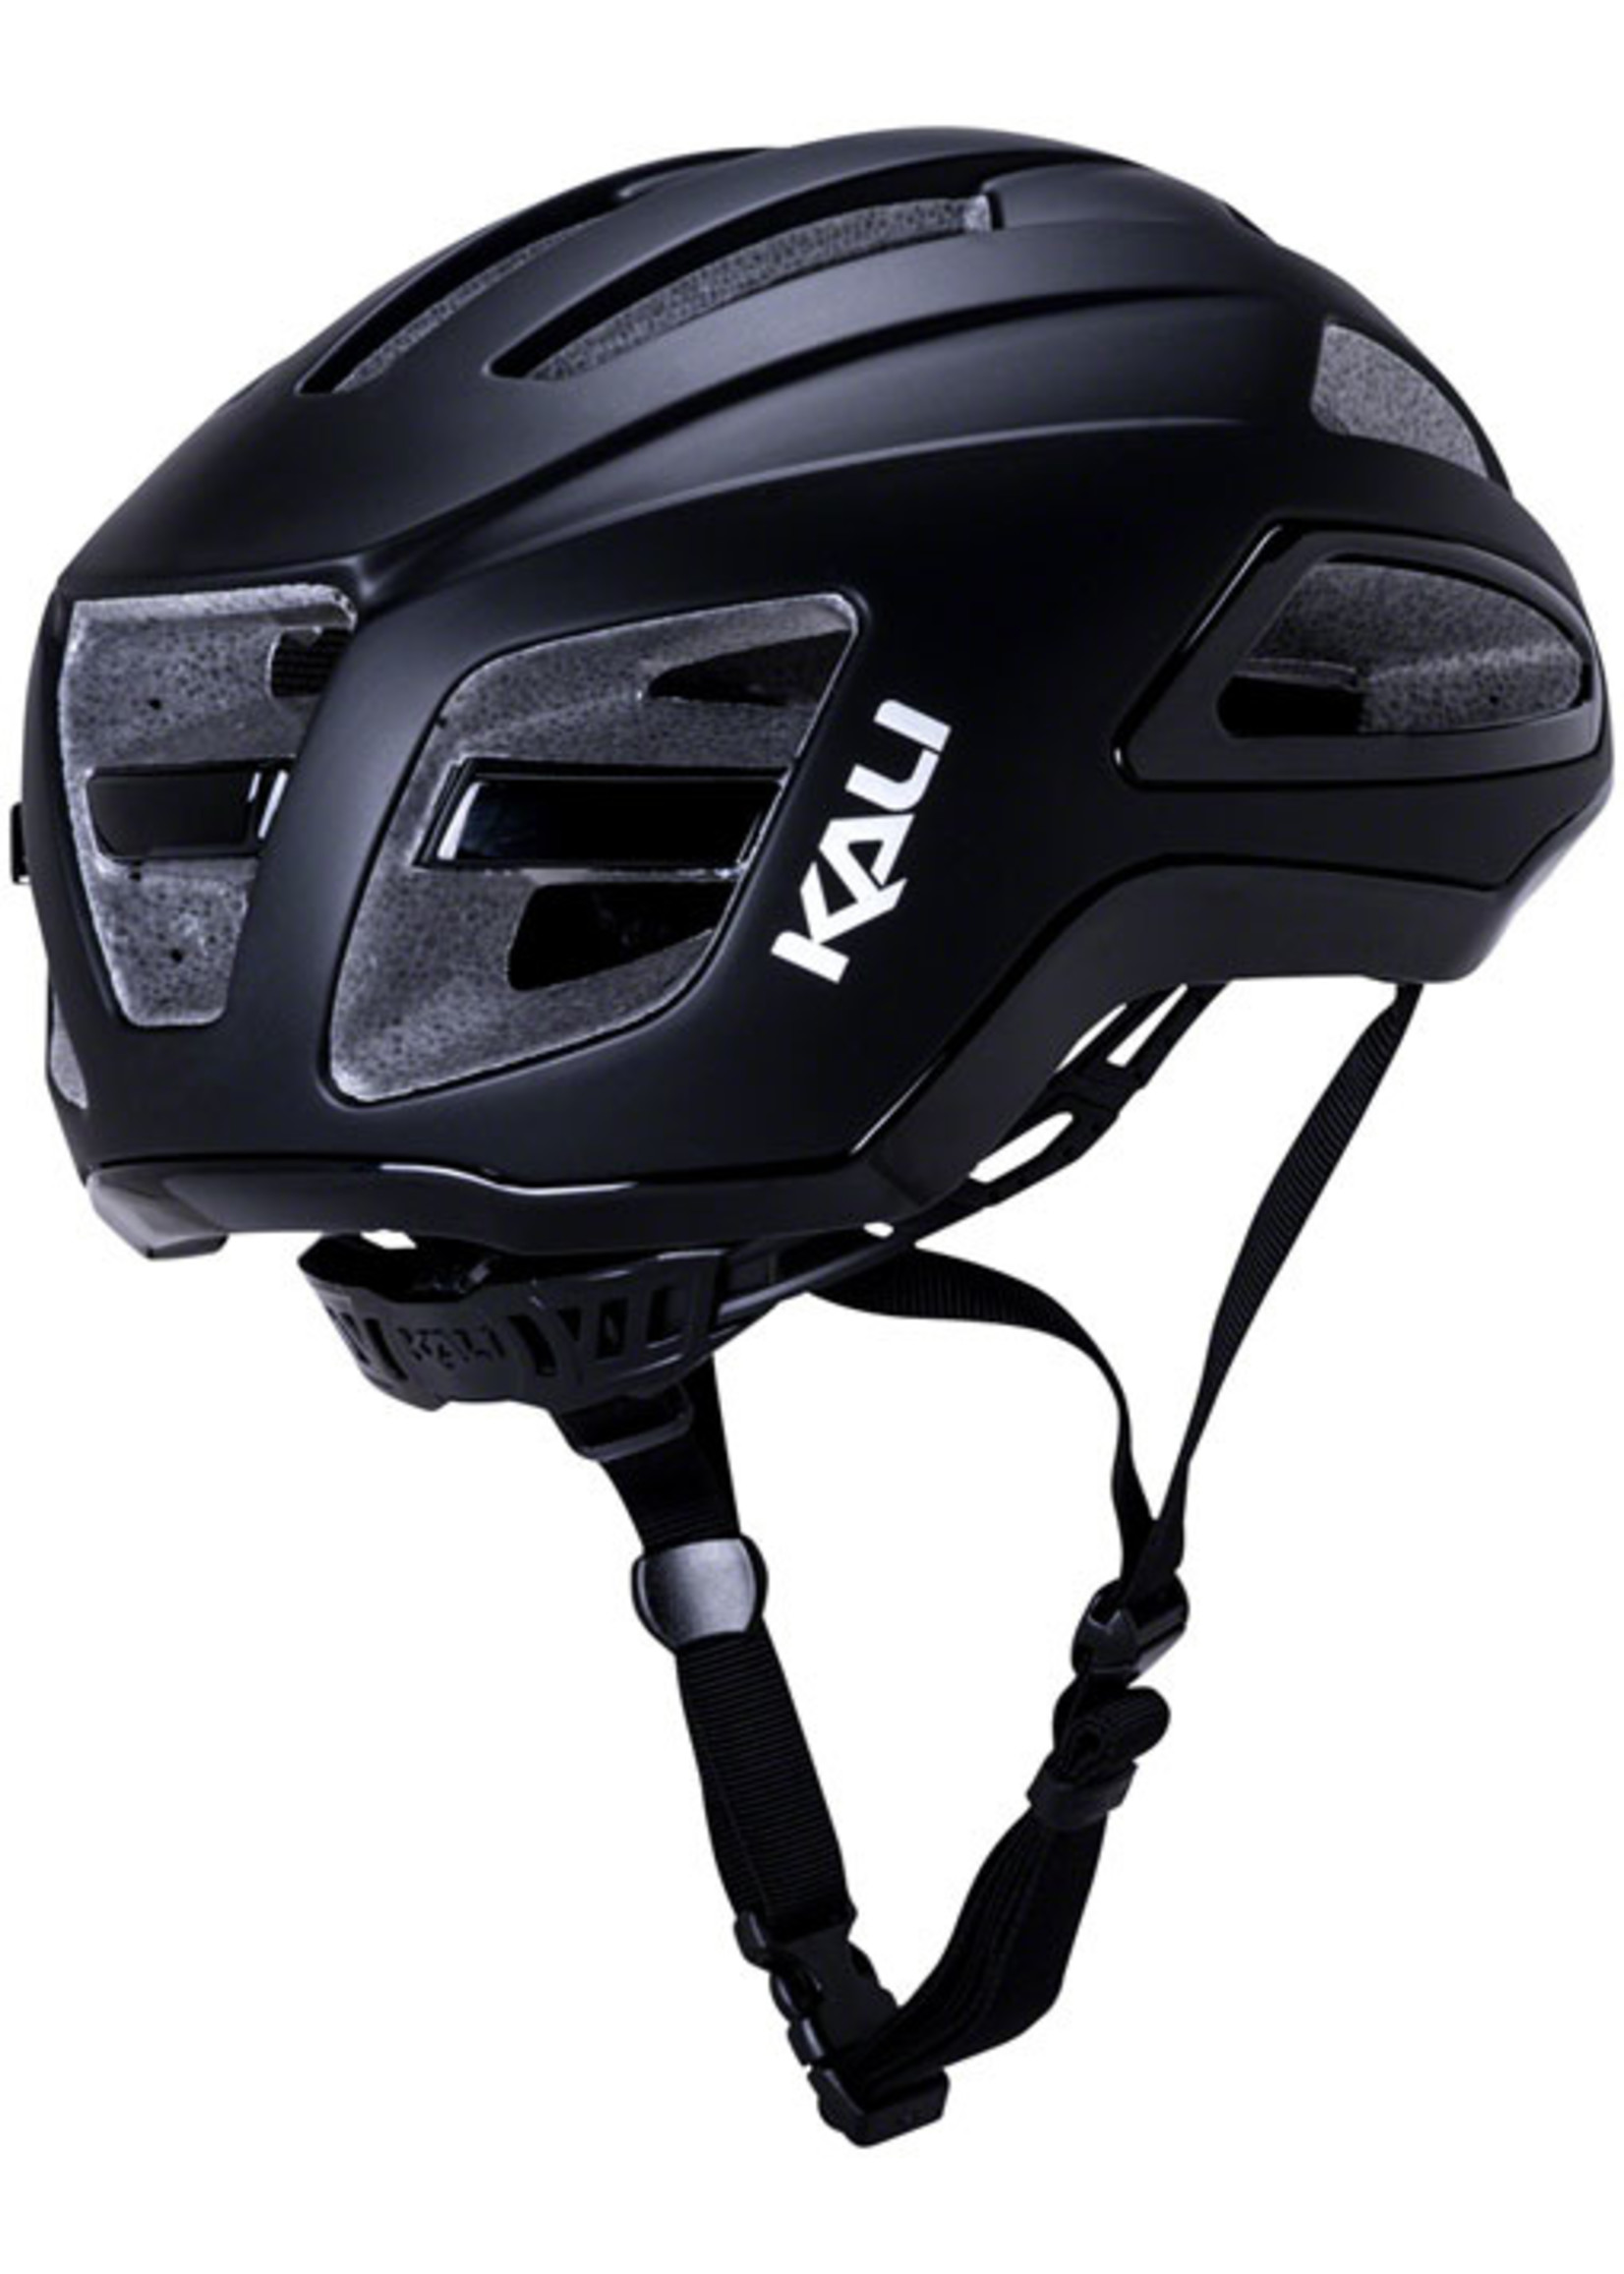 Kali Protectives Kali Protectives Uno Helmet - Solid Matte Black Small/Medium